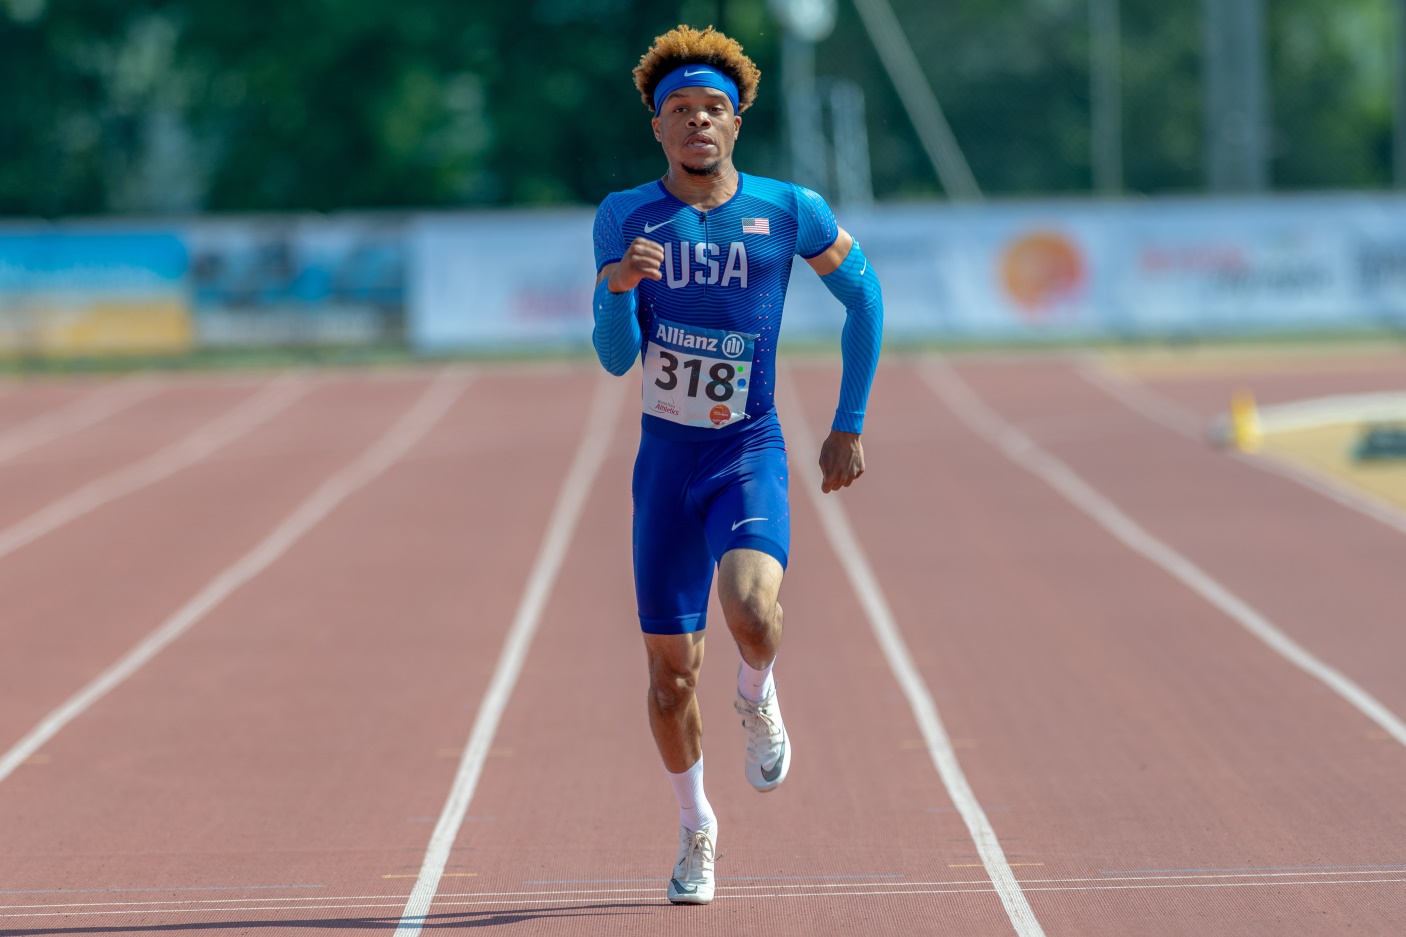 Nottwil 2019 World Para Athletics Junior Championships - Noah Malone - USA